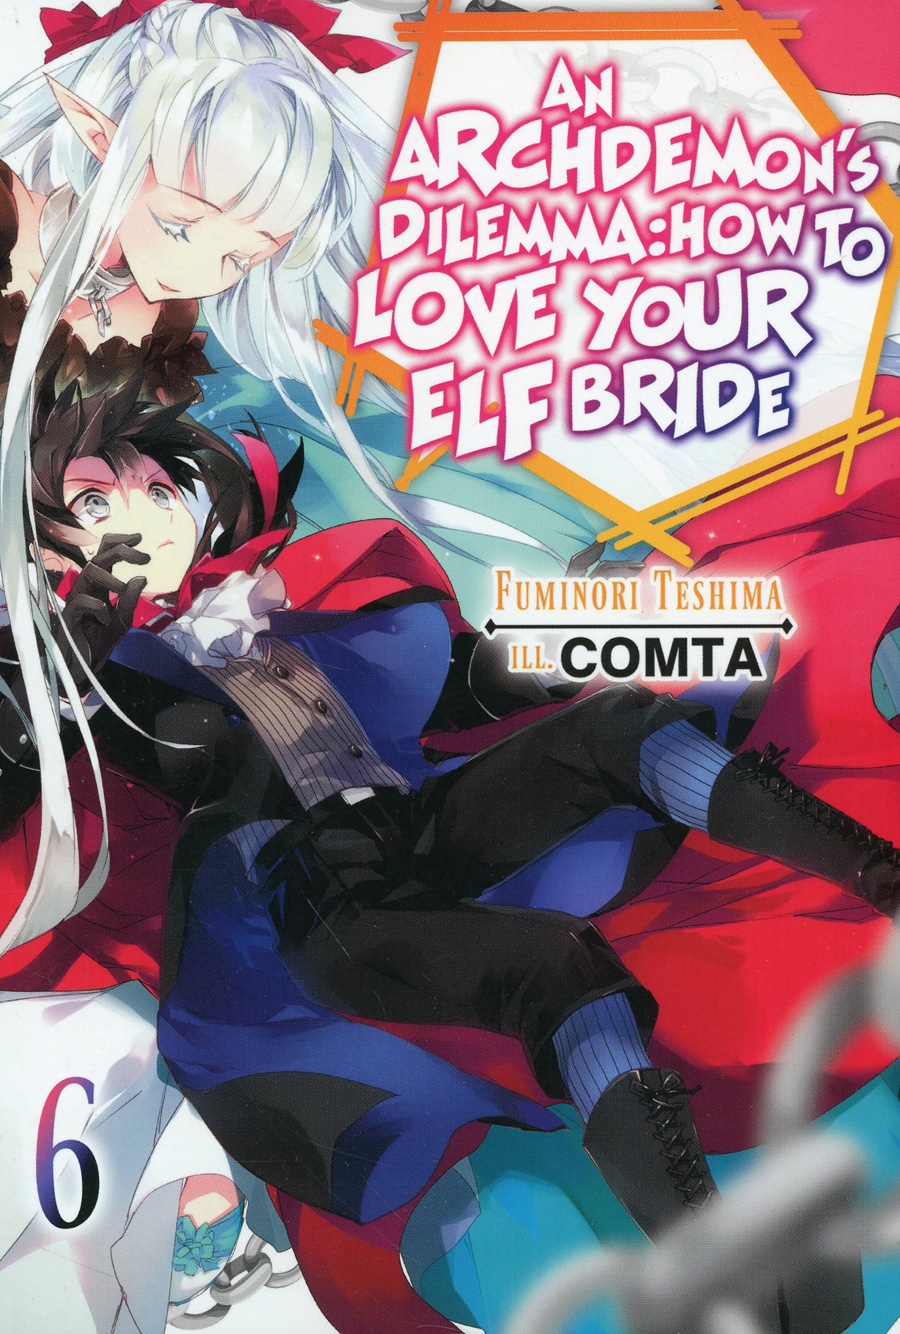 Archdemons Dilemma How To Love Your Elf Bride Light Novel Vol 6